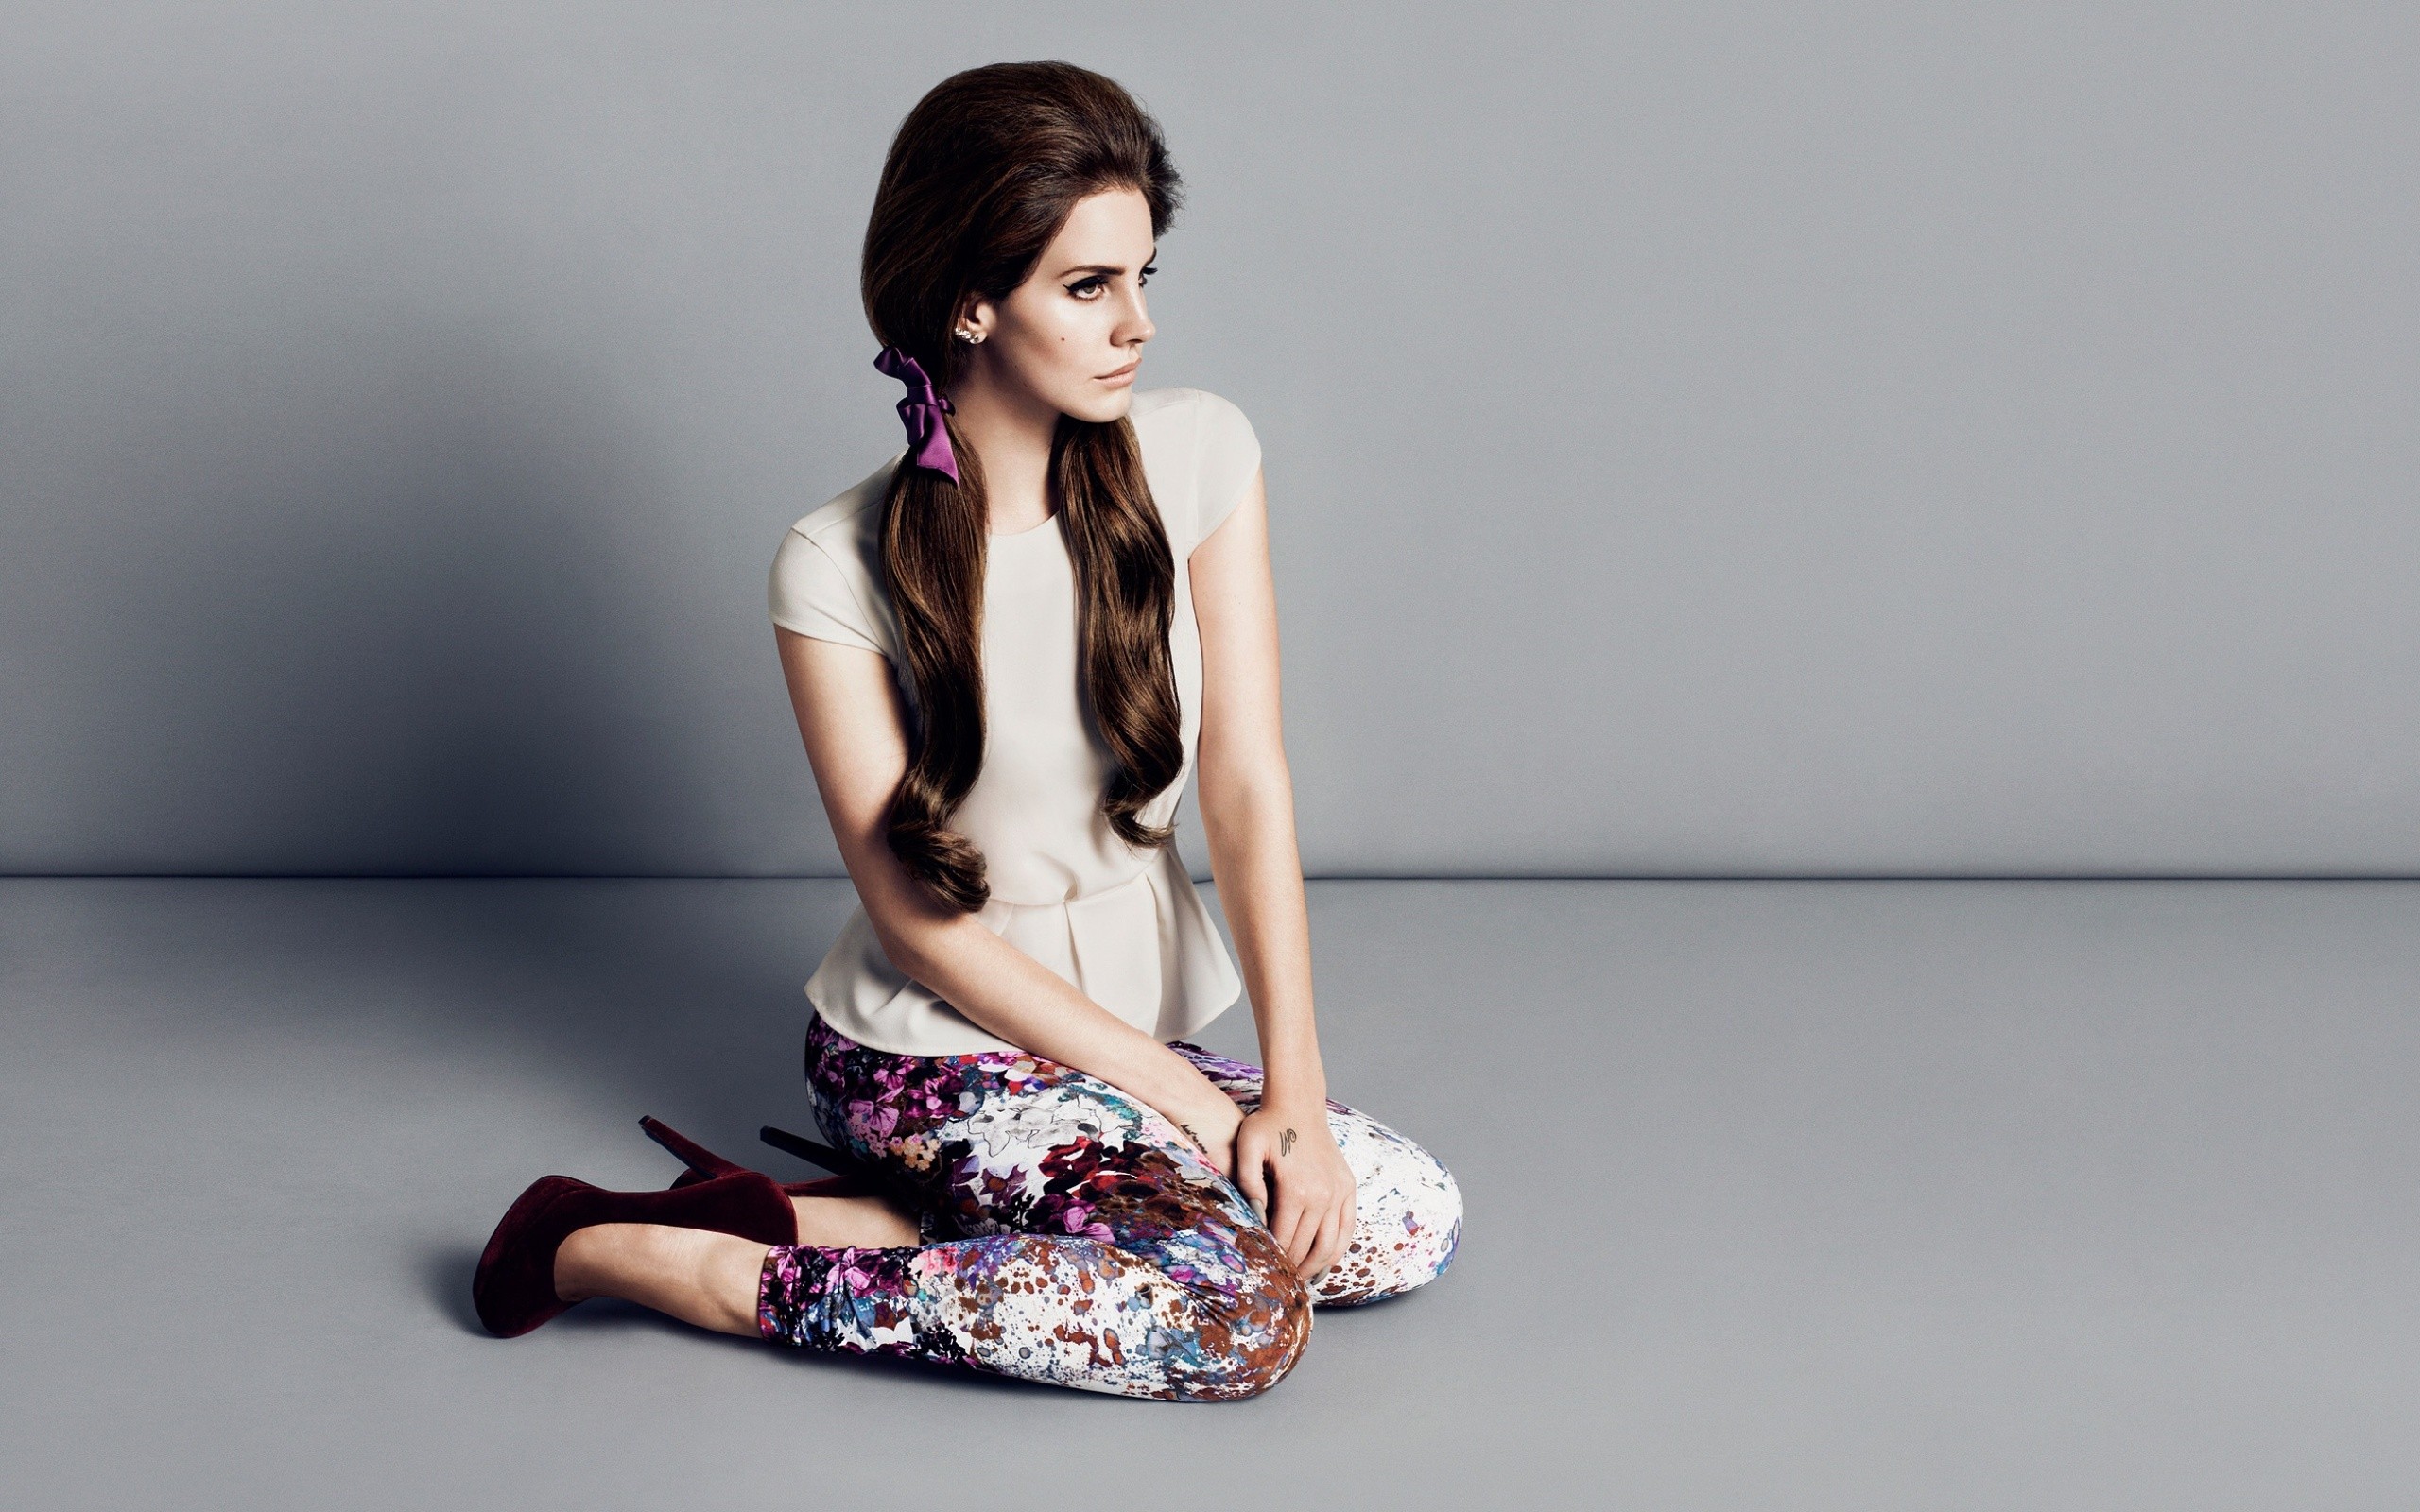 Lana Del Rey Wallpapers Pixelstalk Net Images, Photos, Reviews